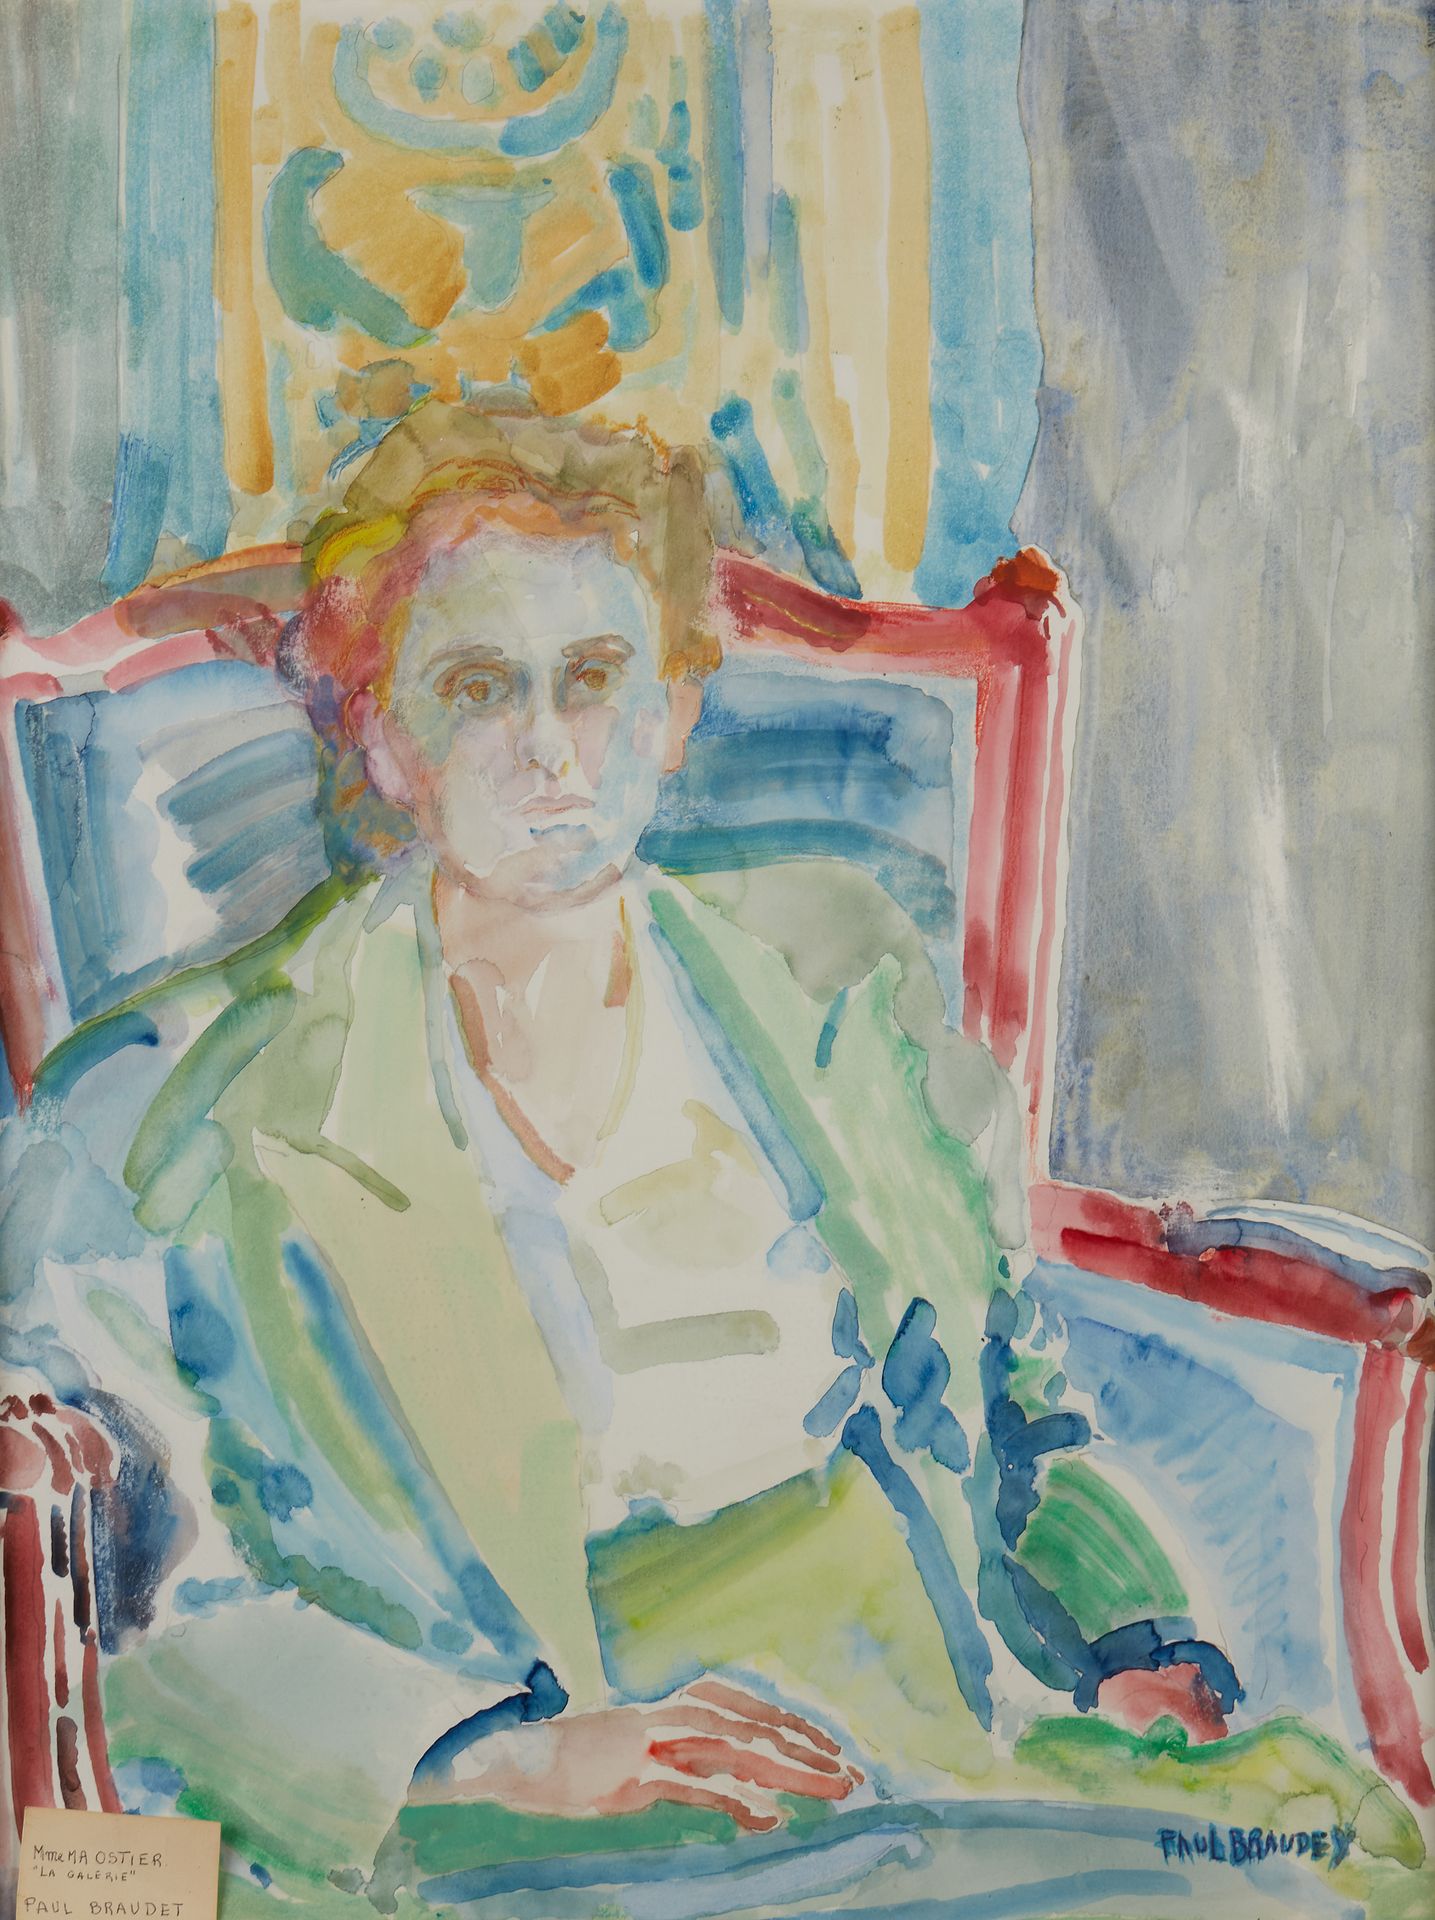 Null Paul BRAUDEY (生于1930年)


坐在扶手椅上的女人的画像


纸上水彩，右下角有签名


64 x 48,5 cm at sight